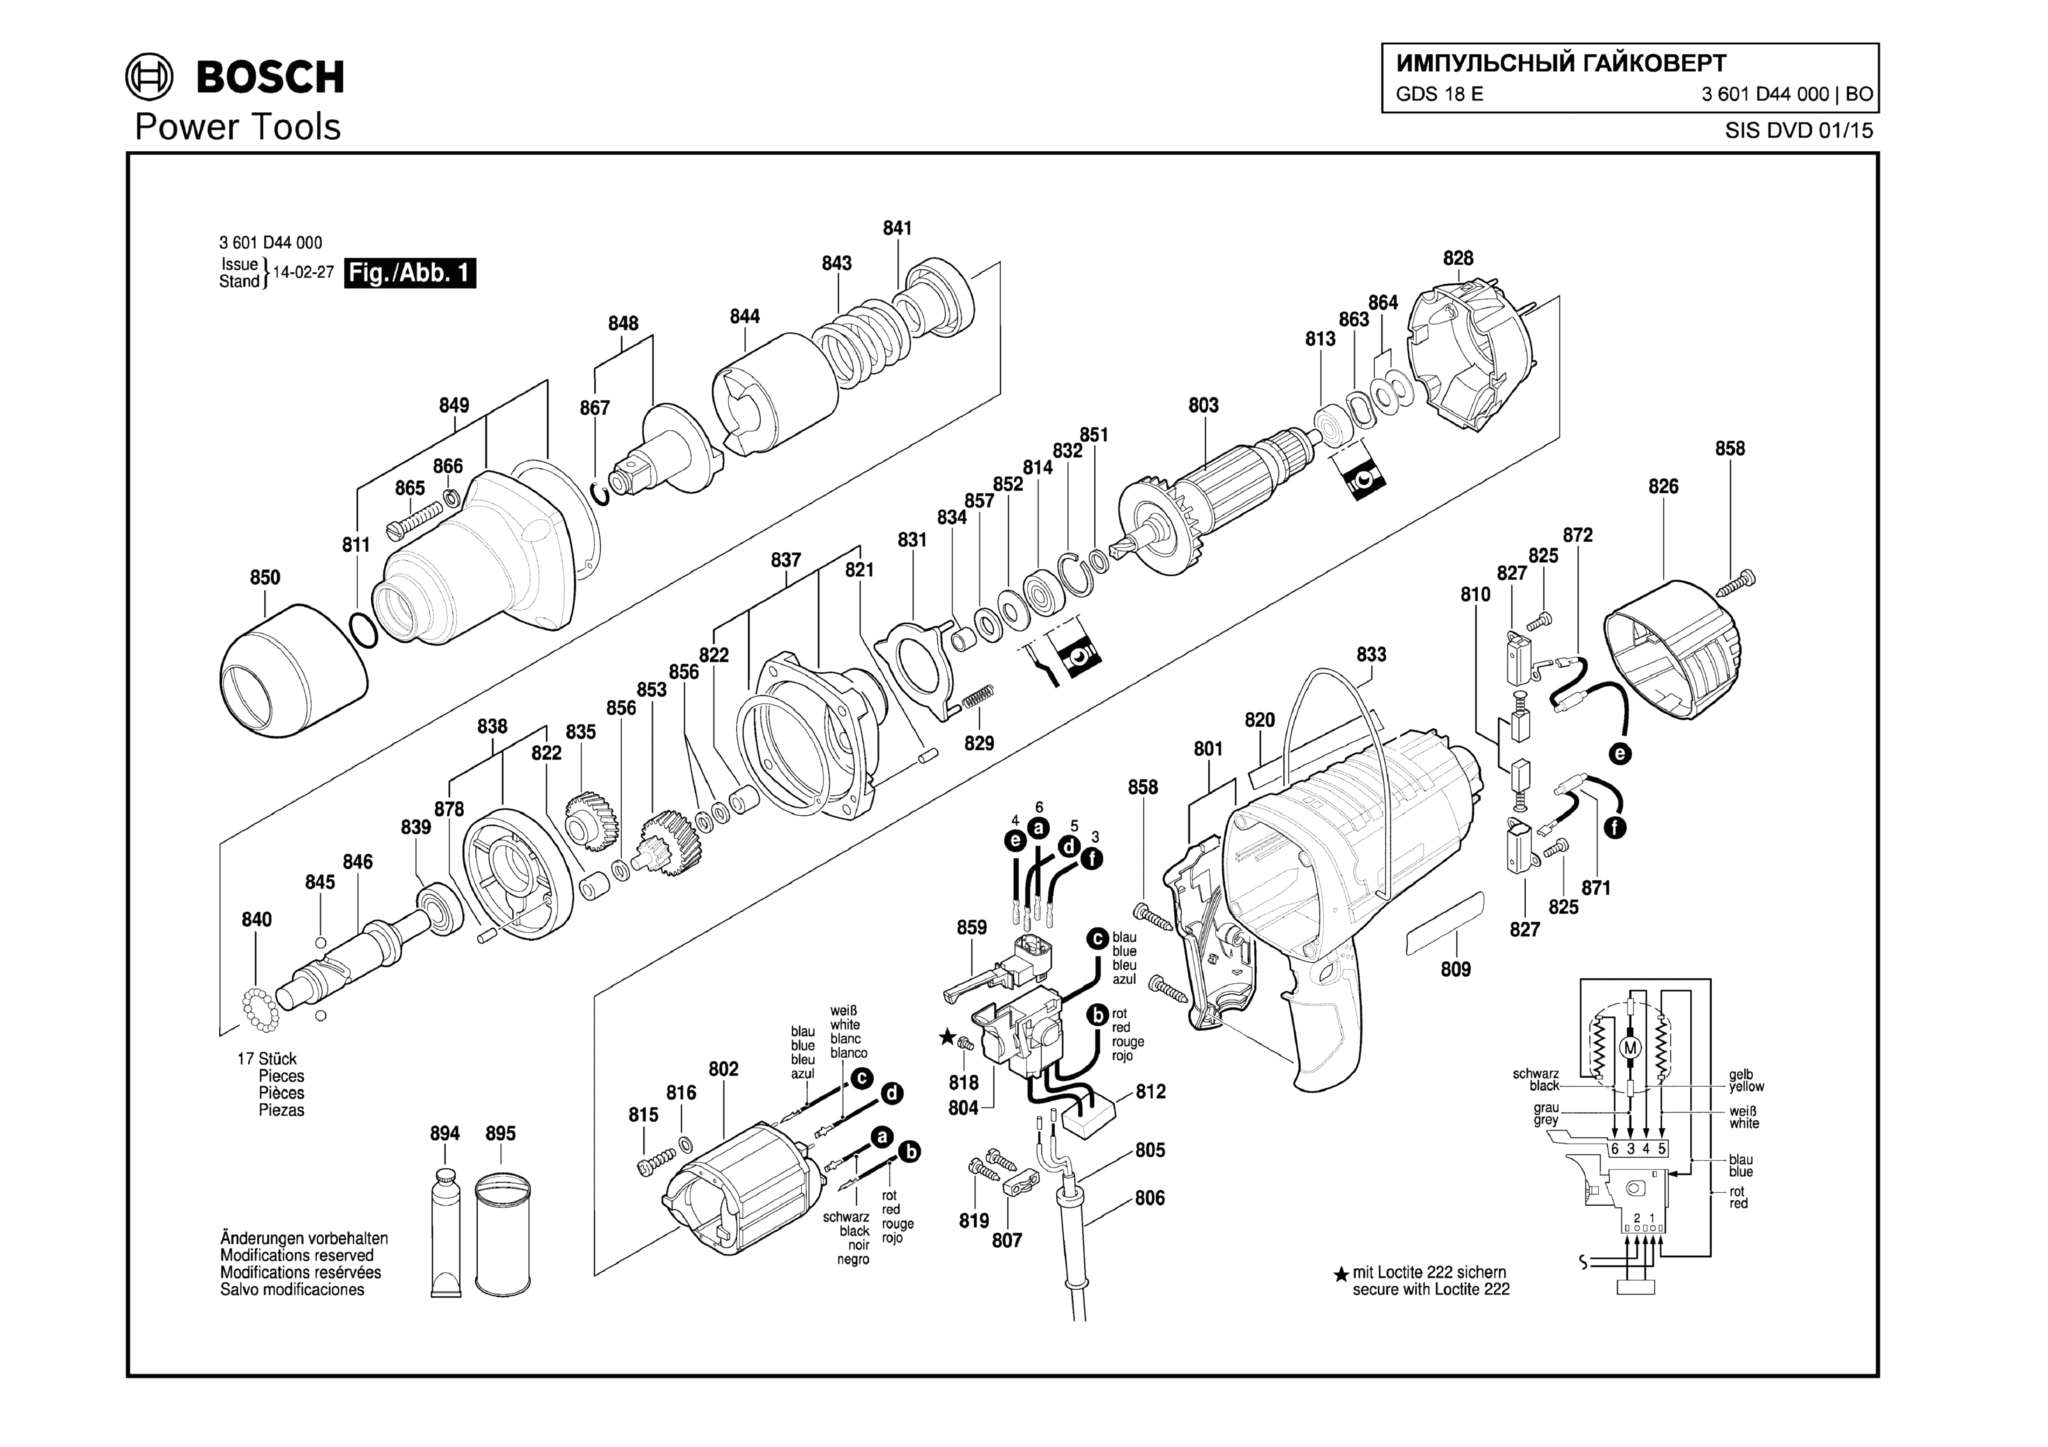 Запчасти, схема и деталировка Bosch GDS 18 E (ТИП 3601D44000)